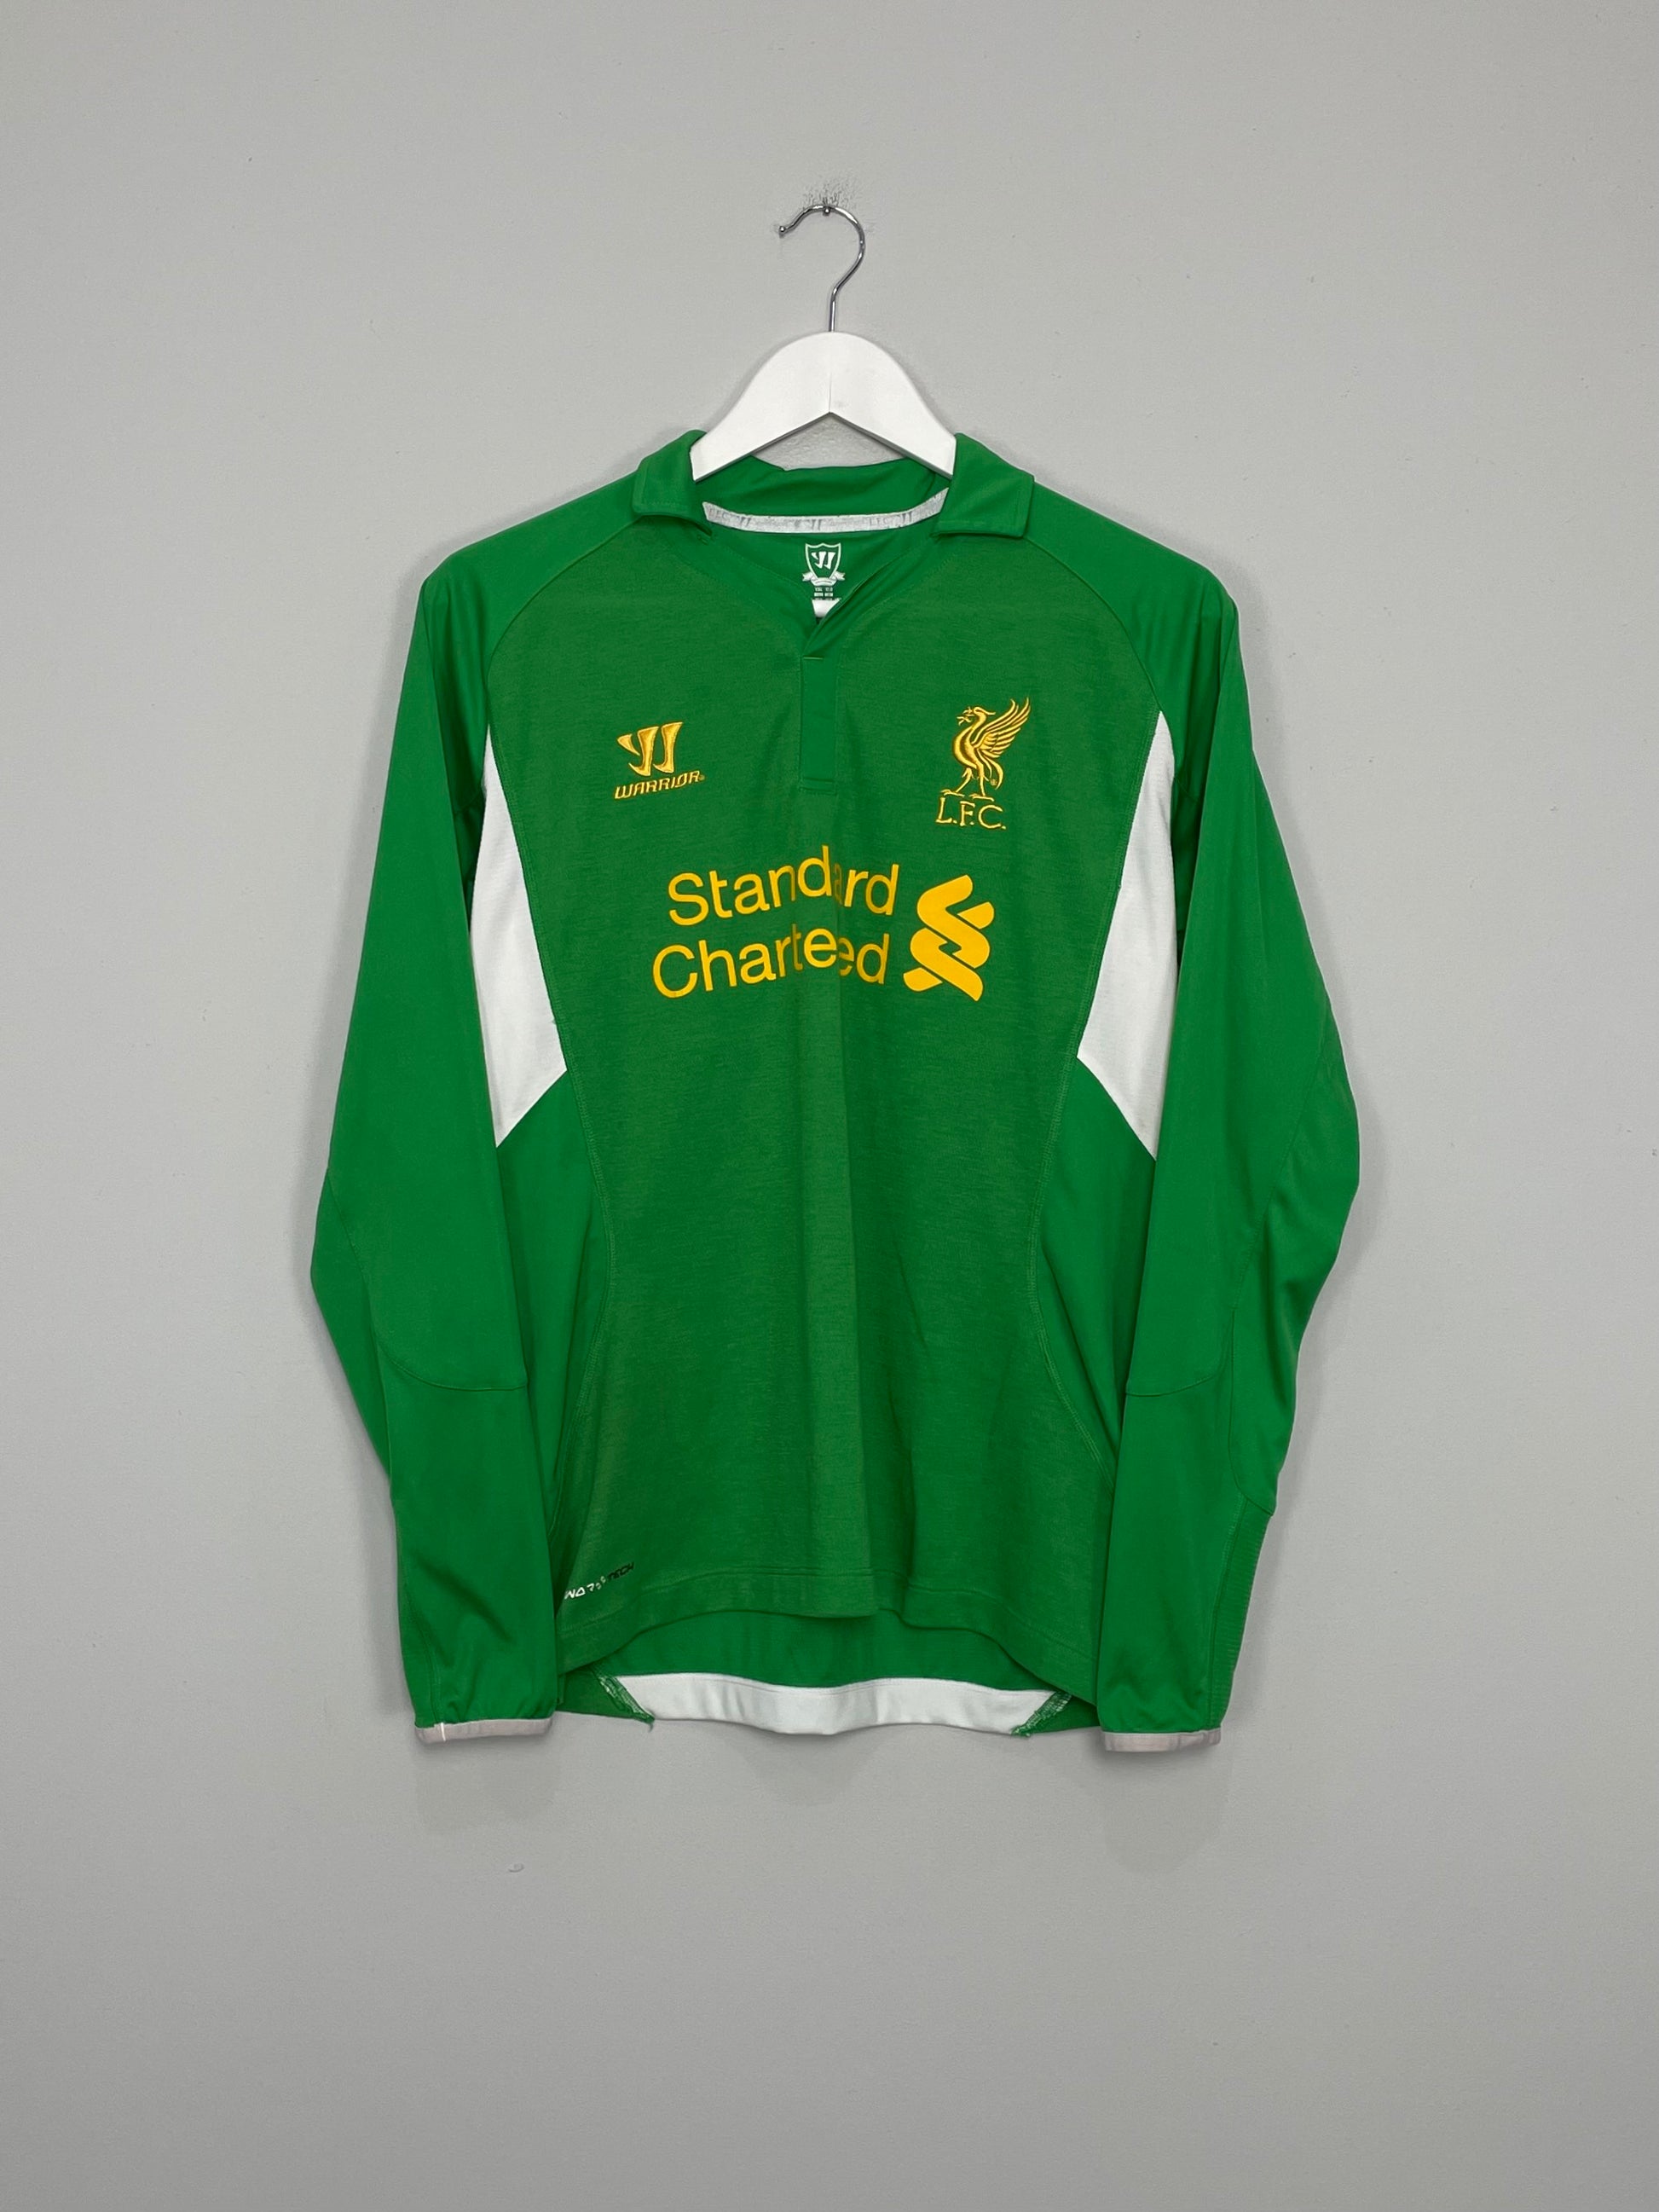 Liverpool FC Childrens/Kids 2012/13 T Shirt And Short Set